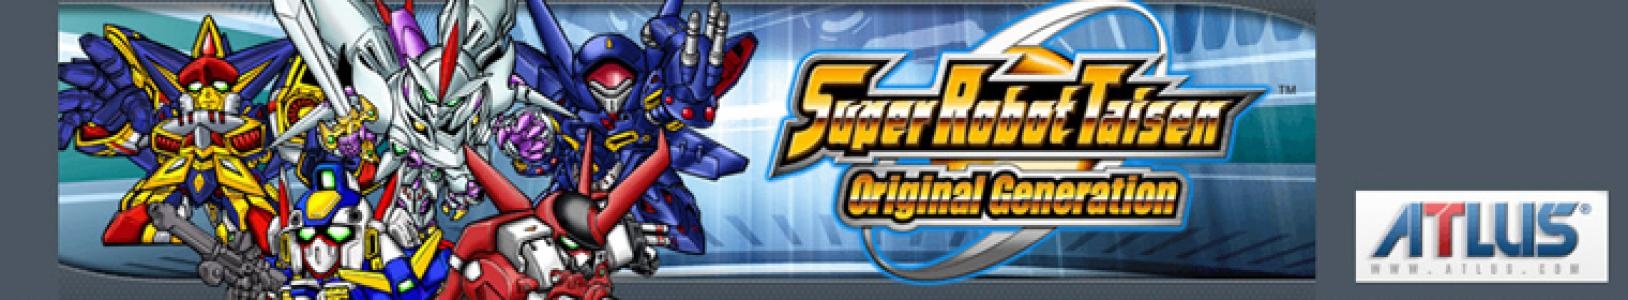 Super Robot Taisen: Original Generation banner